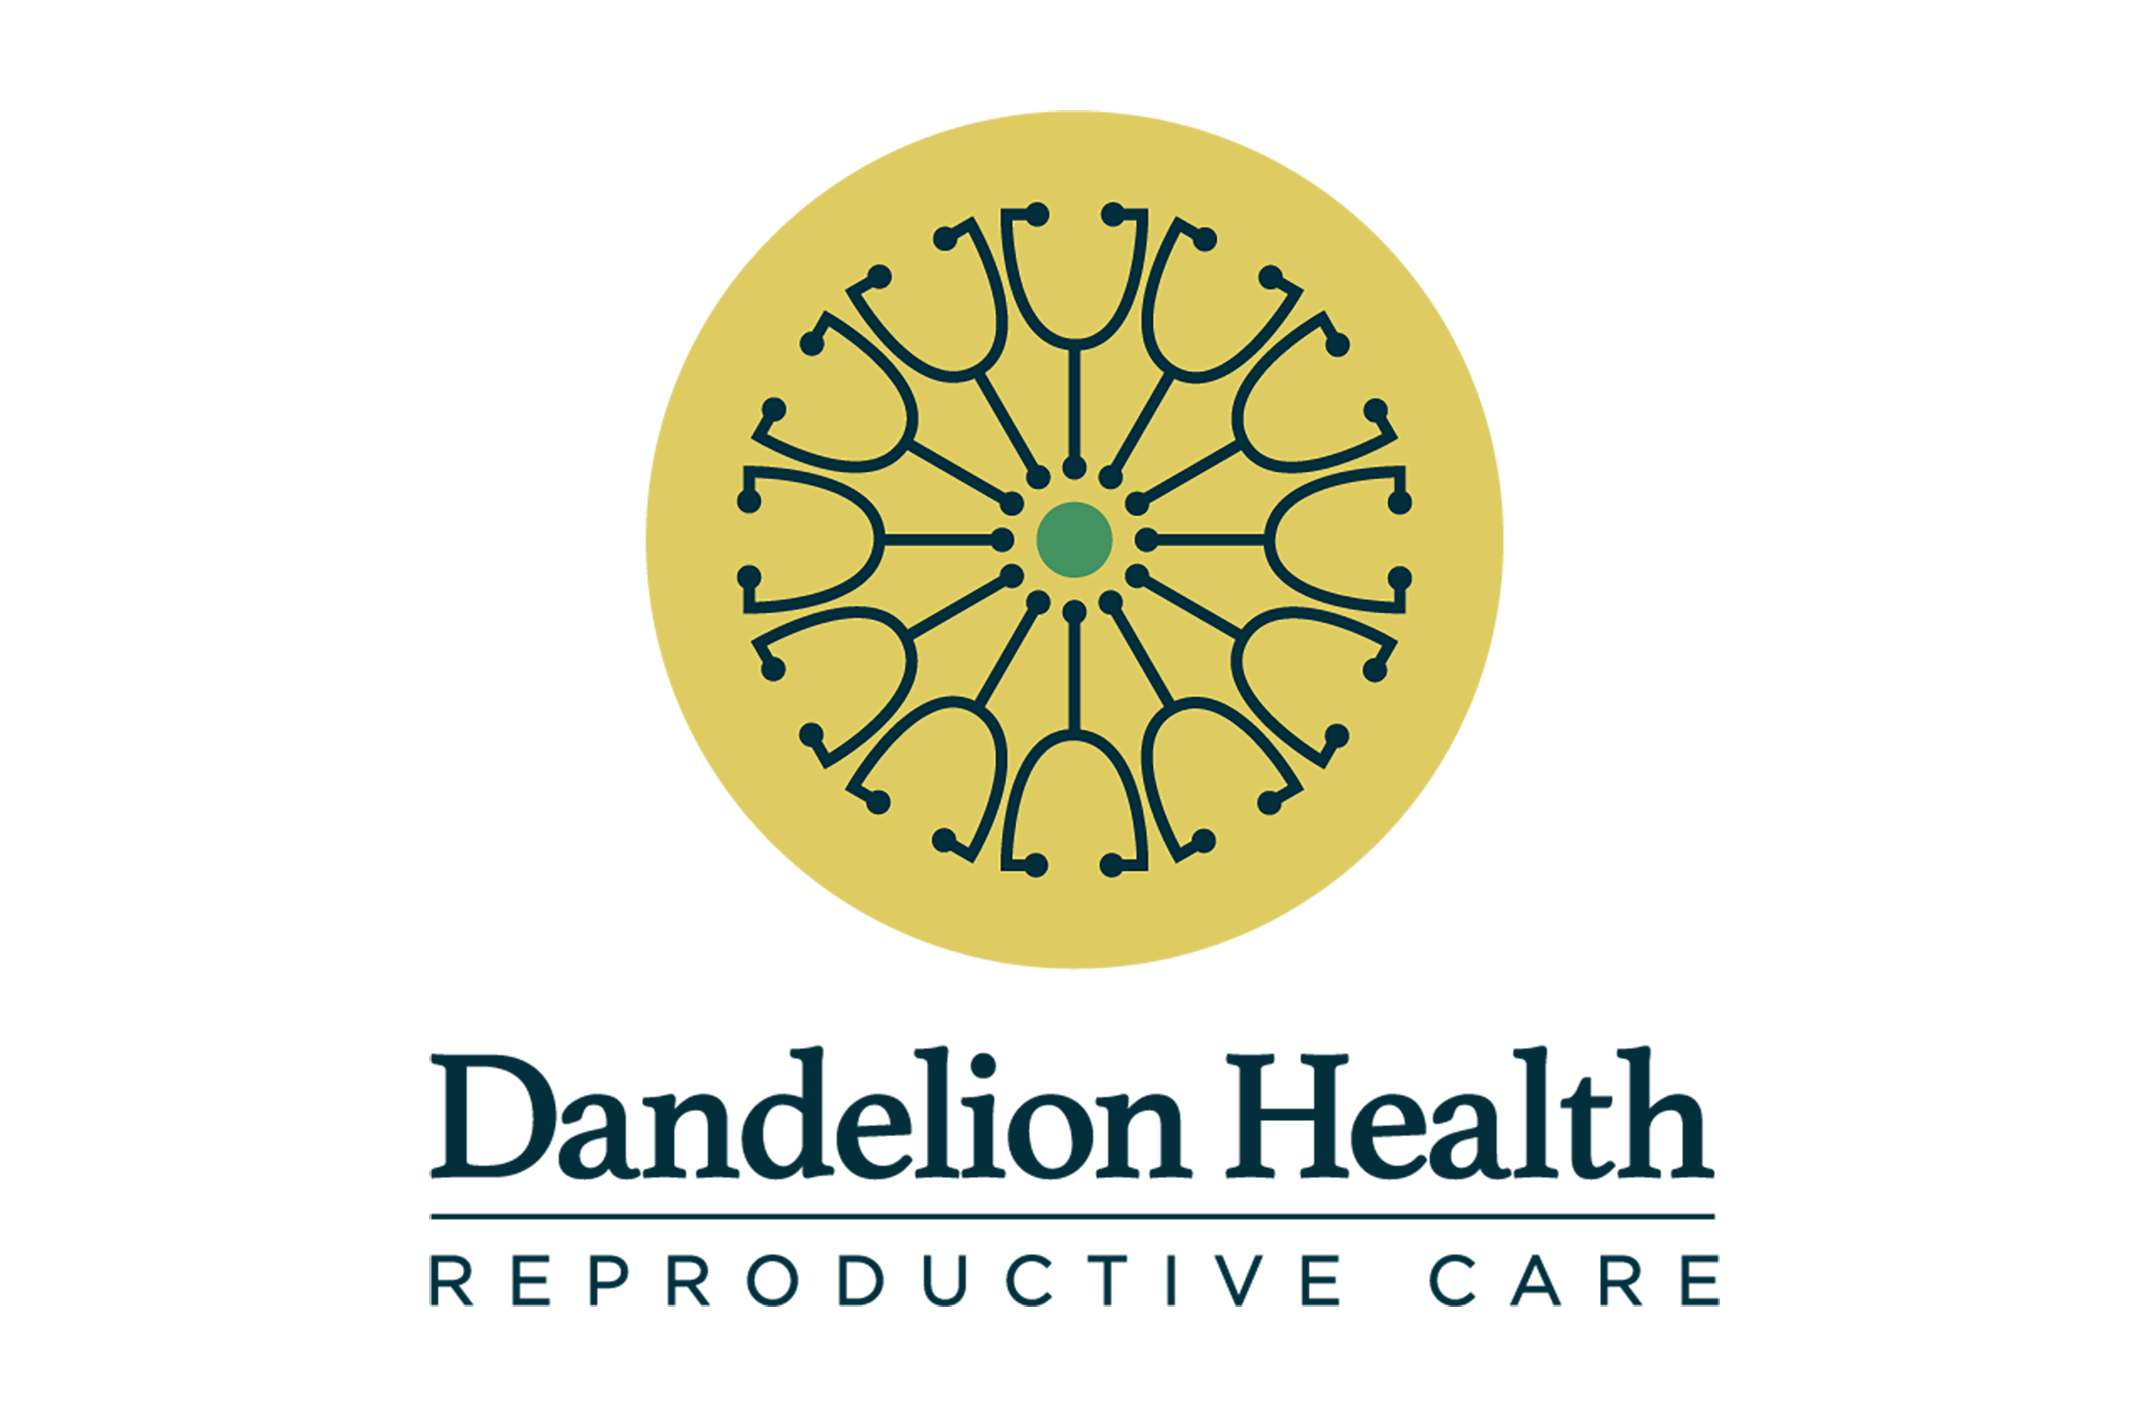 Dandelion Health